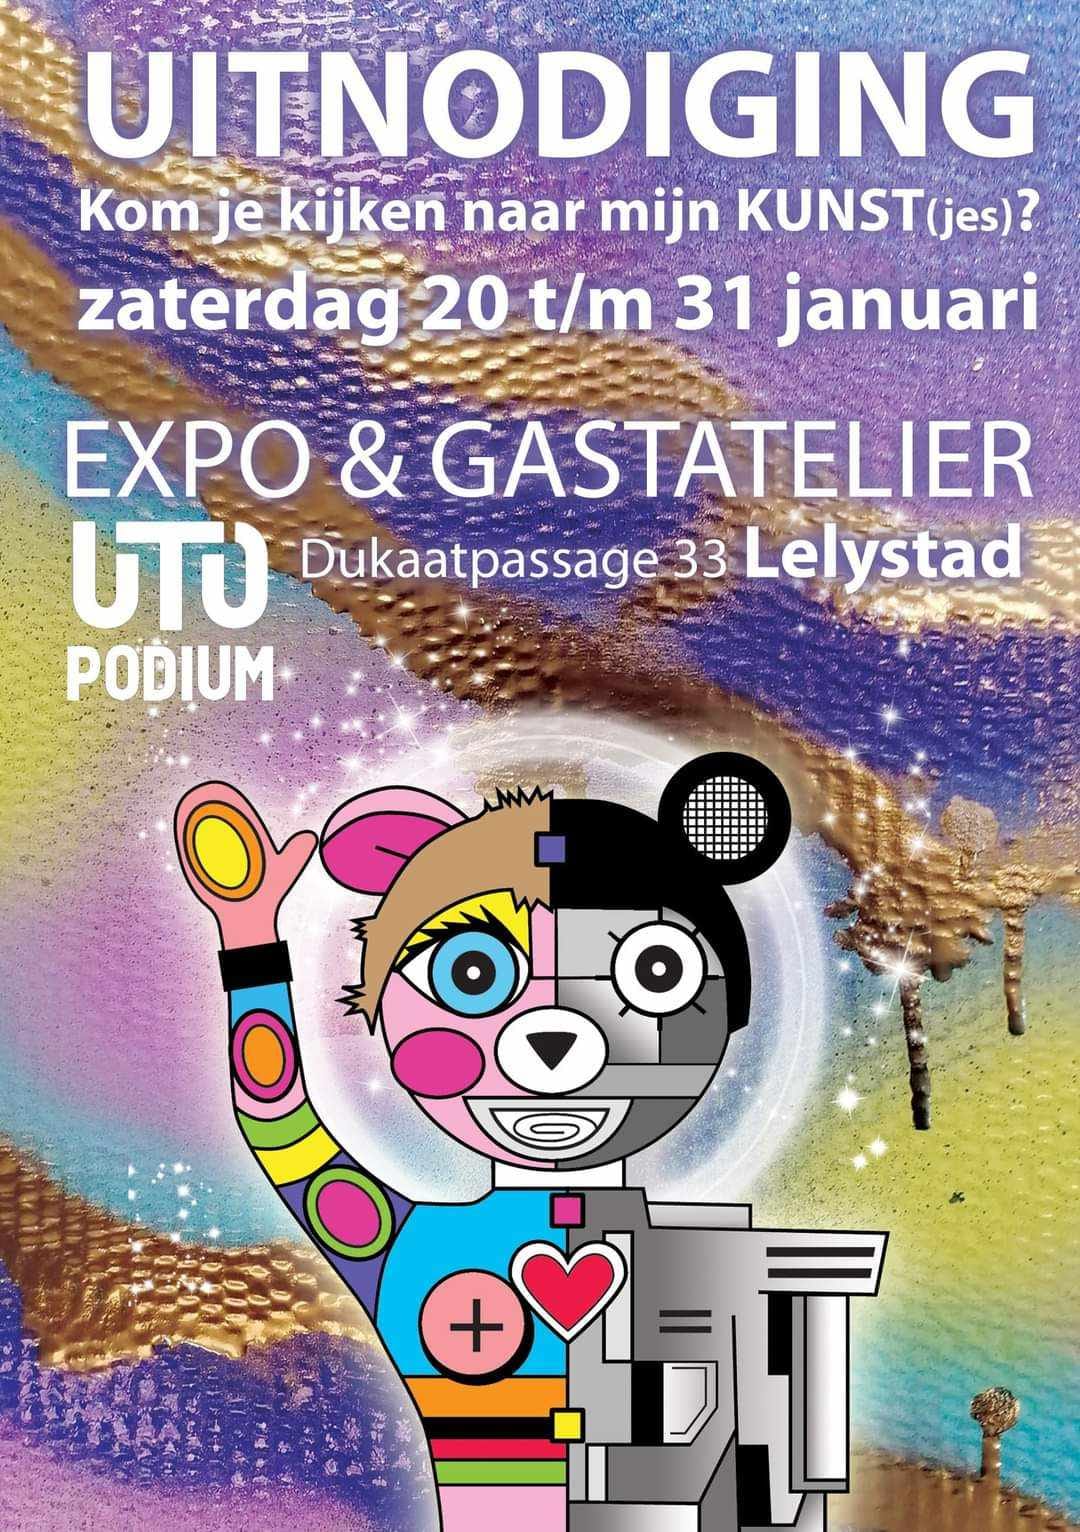 Expo & Gastatelier